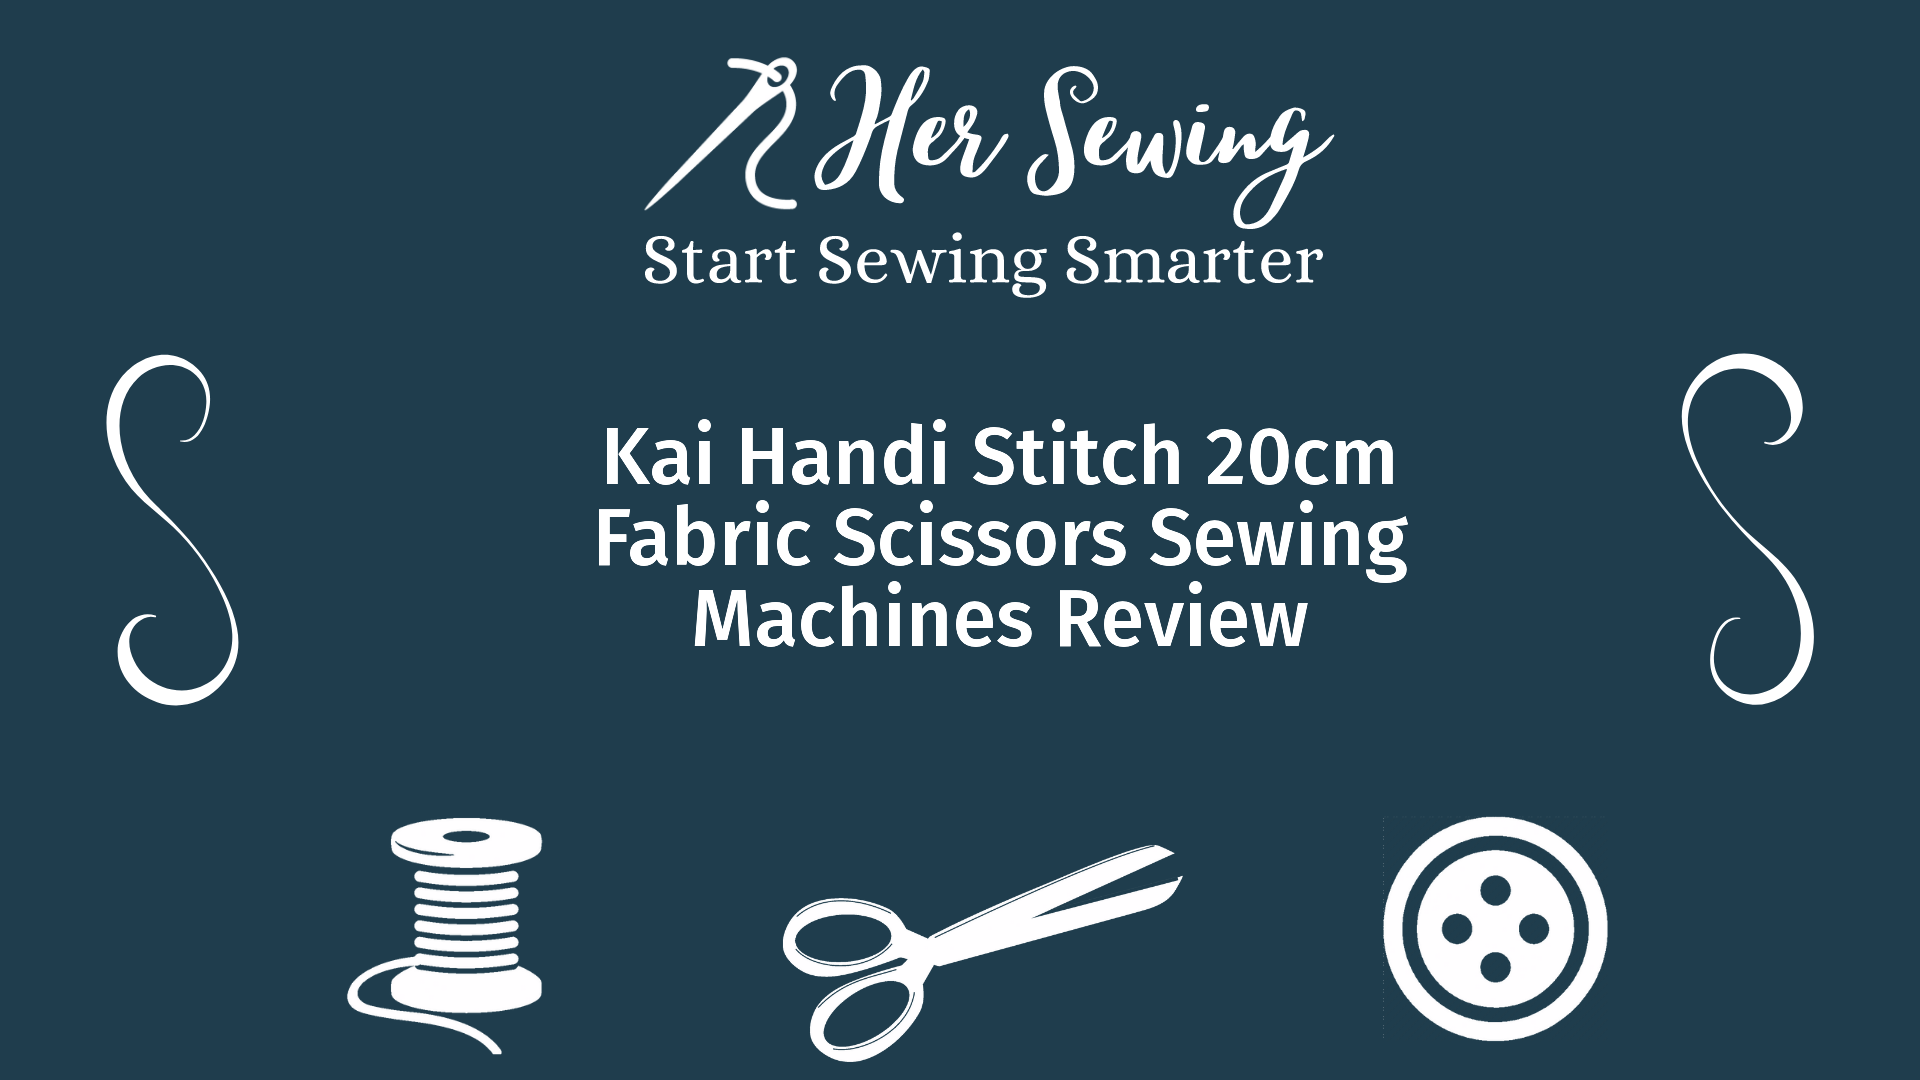 Kai Handi Stitch 20cm Fabric Scissors Sewing Machines Review